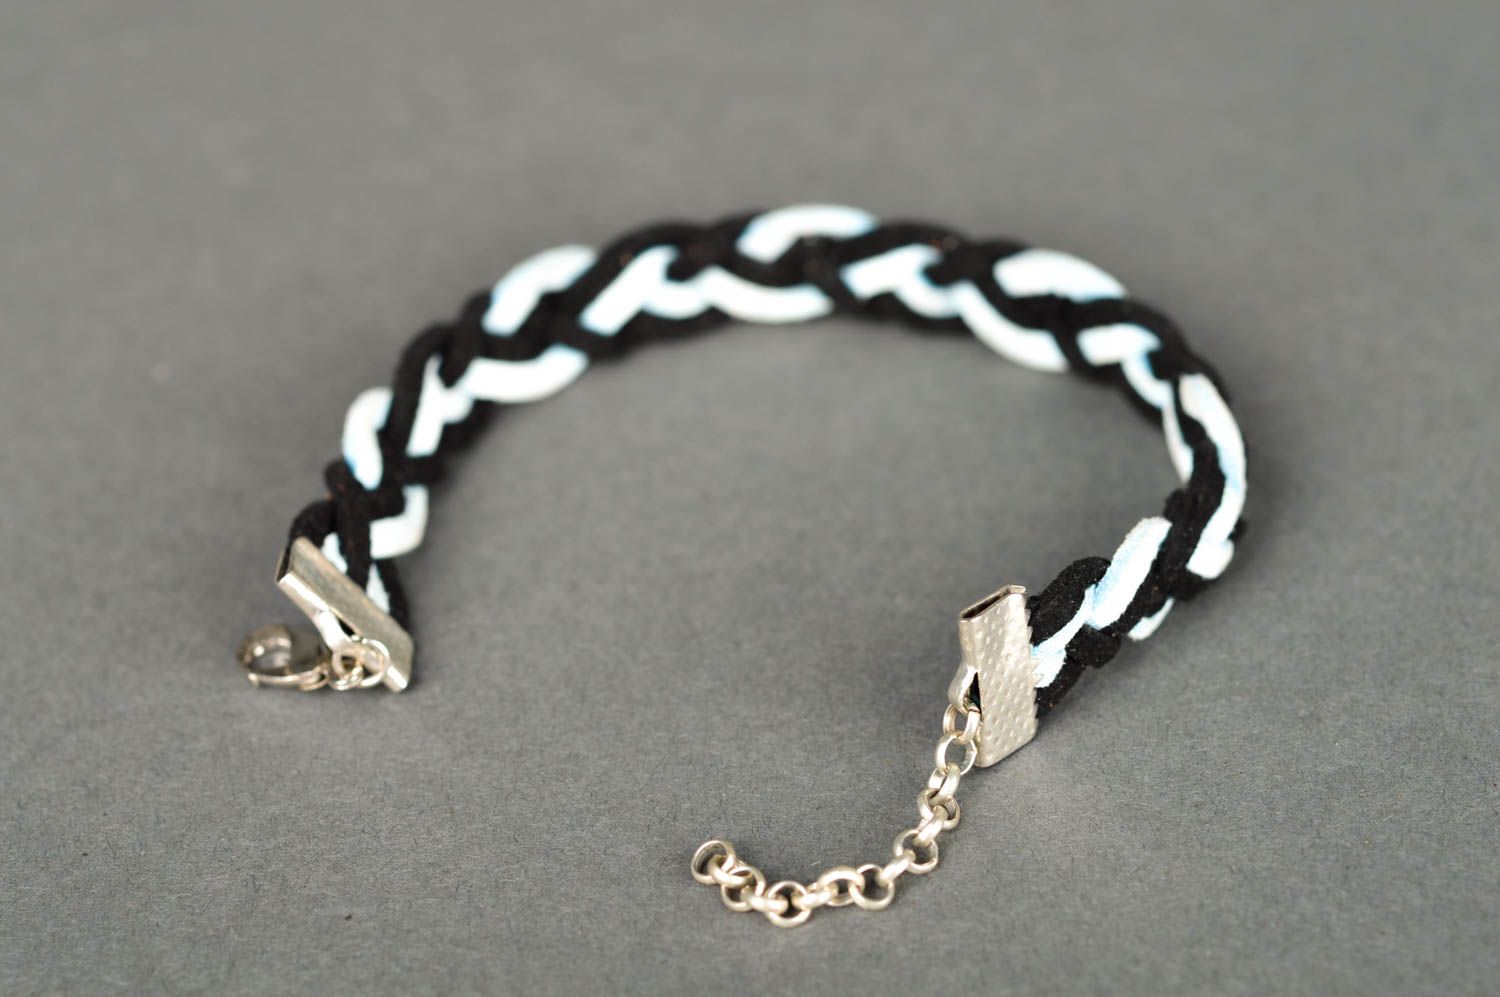 Handmade bracelet suede bracelet wrist bracelet gifts for girls cool jewelry photo 2